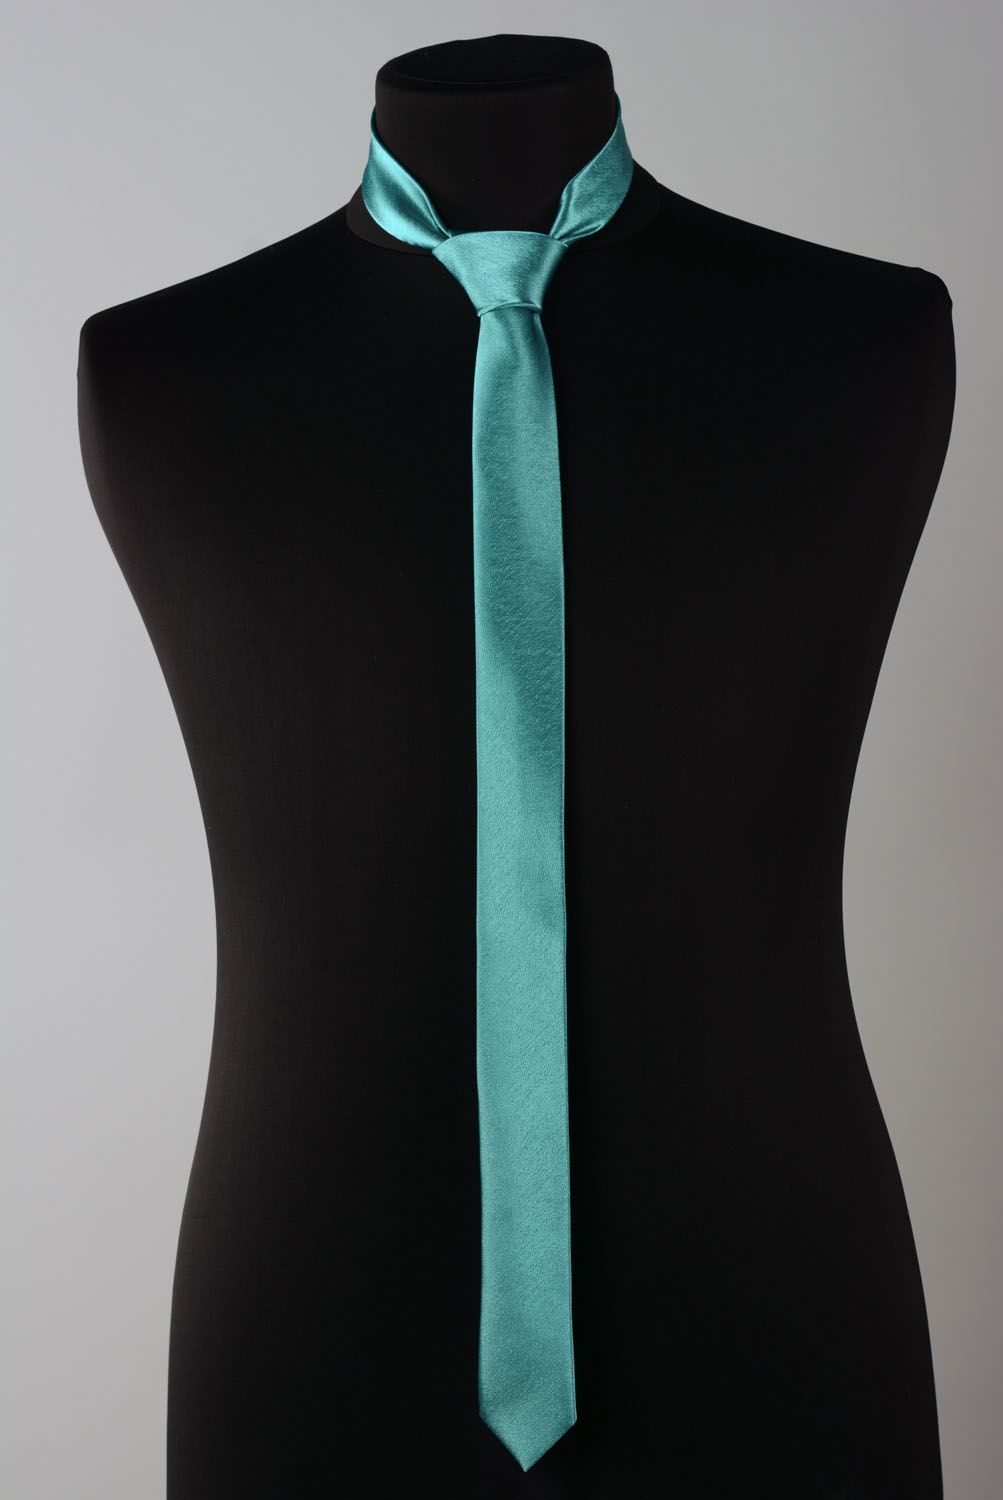 Cravate en satin turquoise faite main photo 4